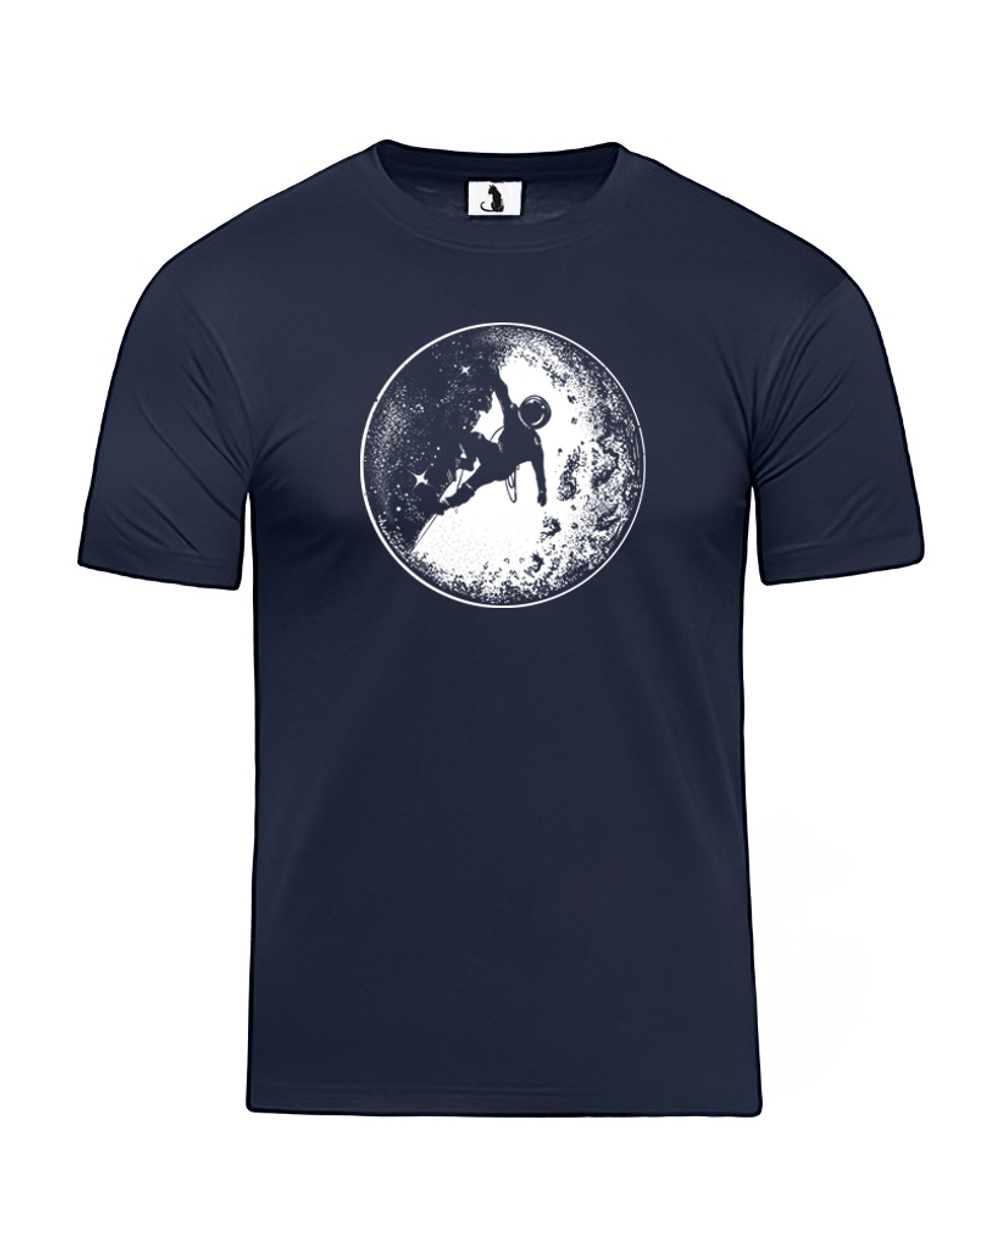 Футболка Космонавт на Луне unisex темно-синяя с белым рисунком